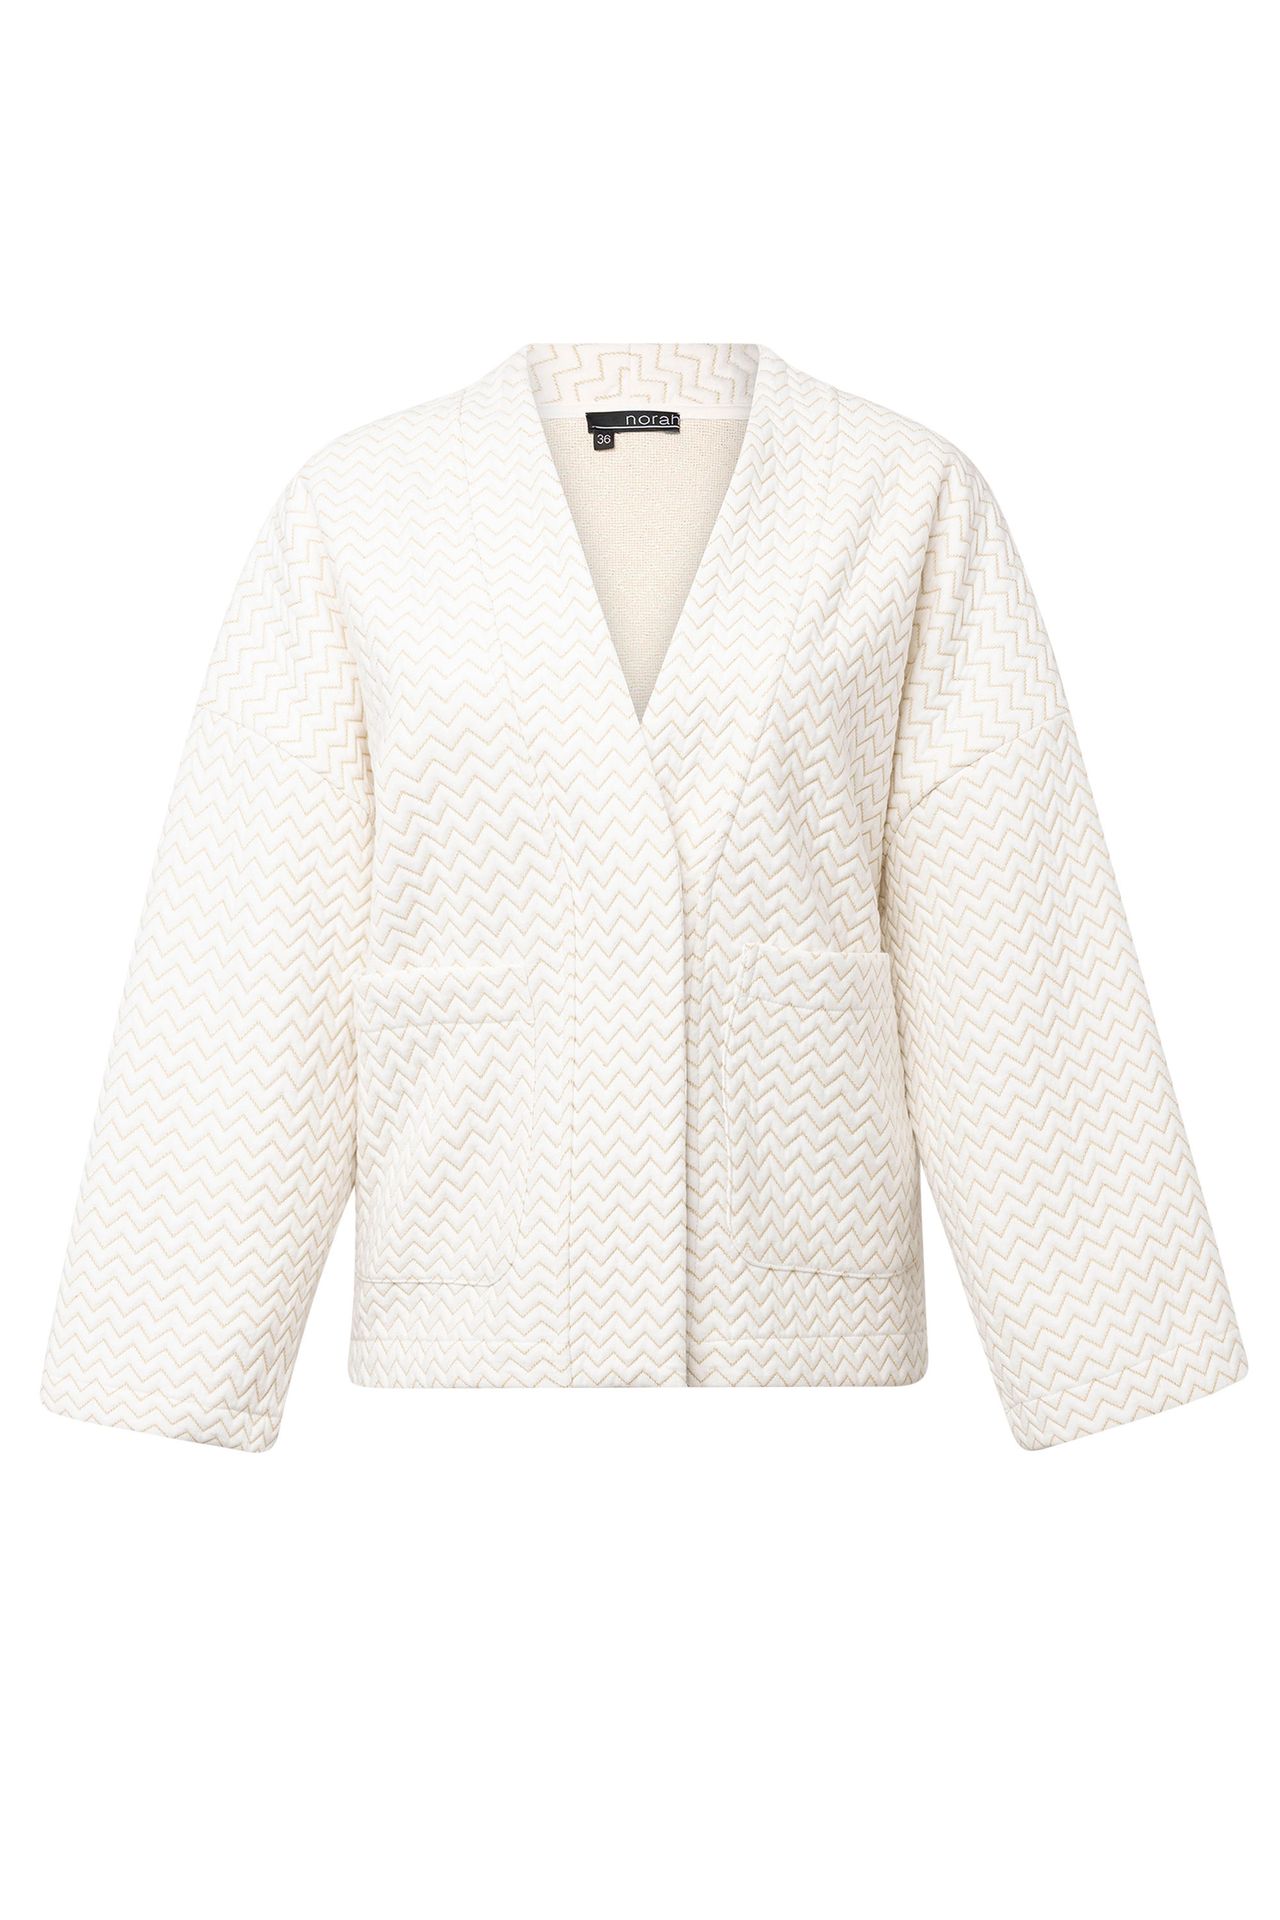 Norah Off white jacket off-white 214529-101